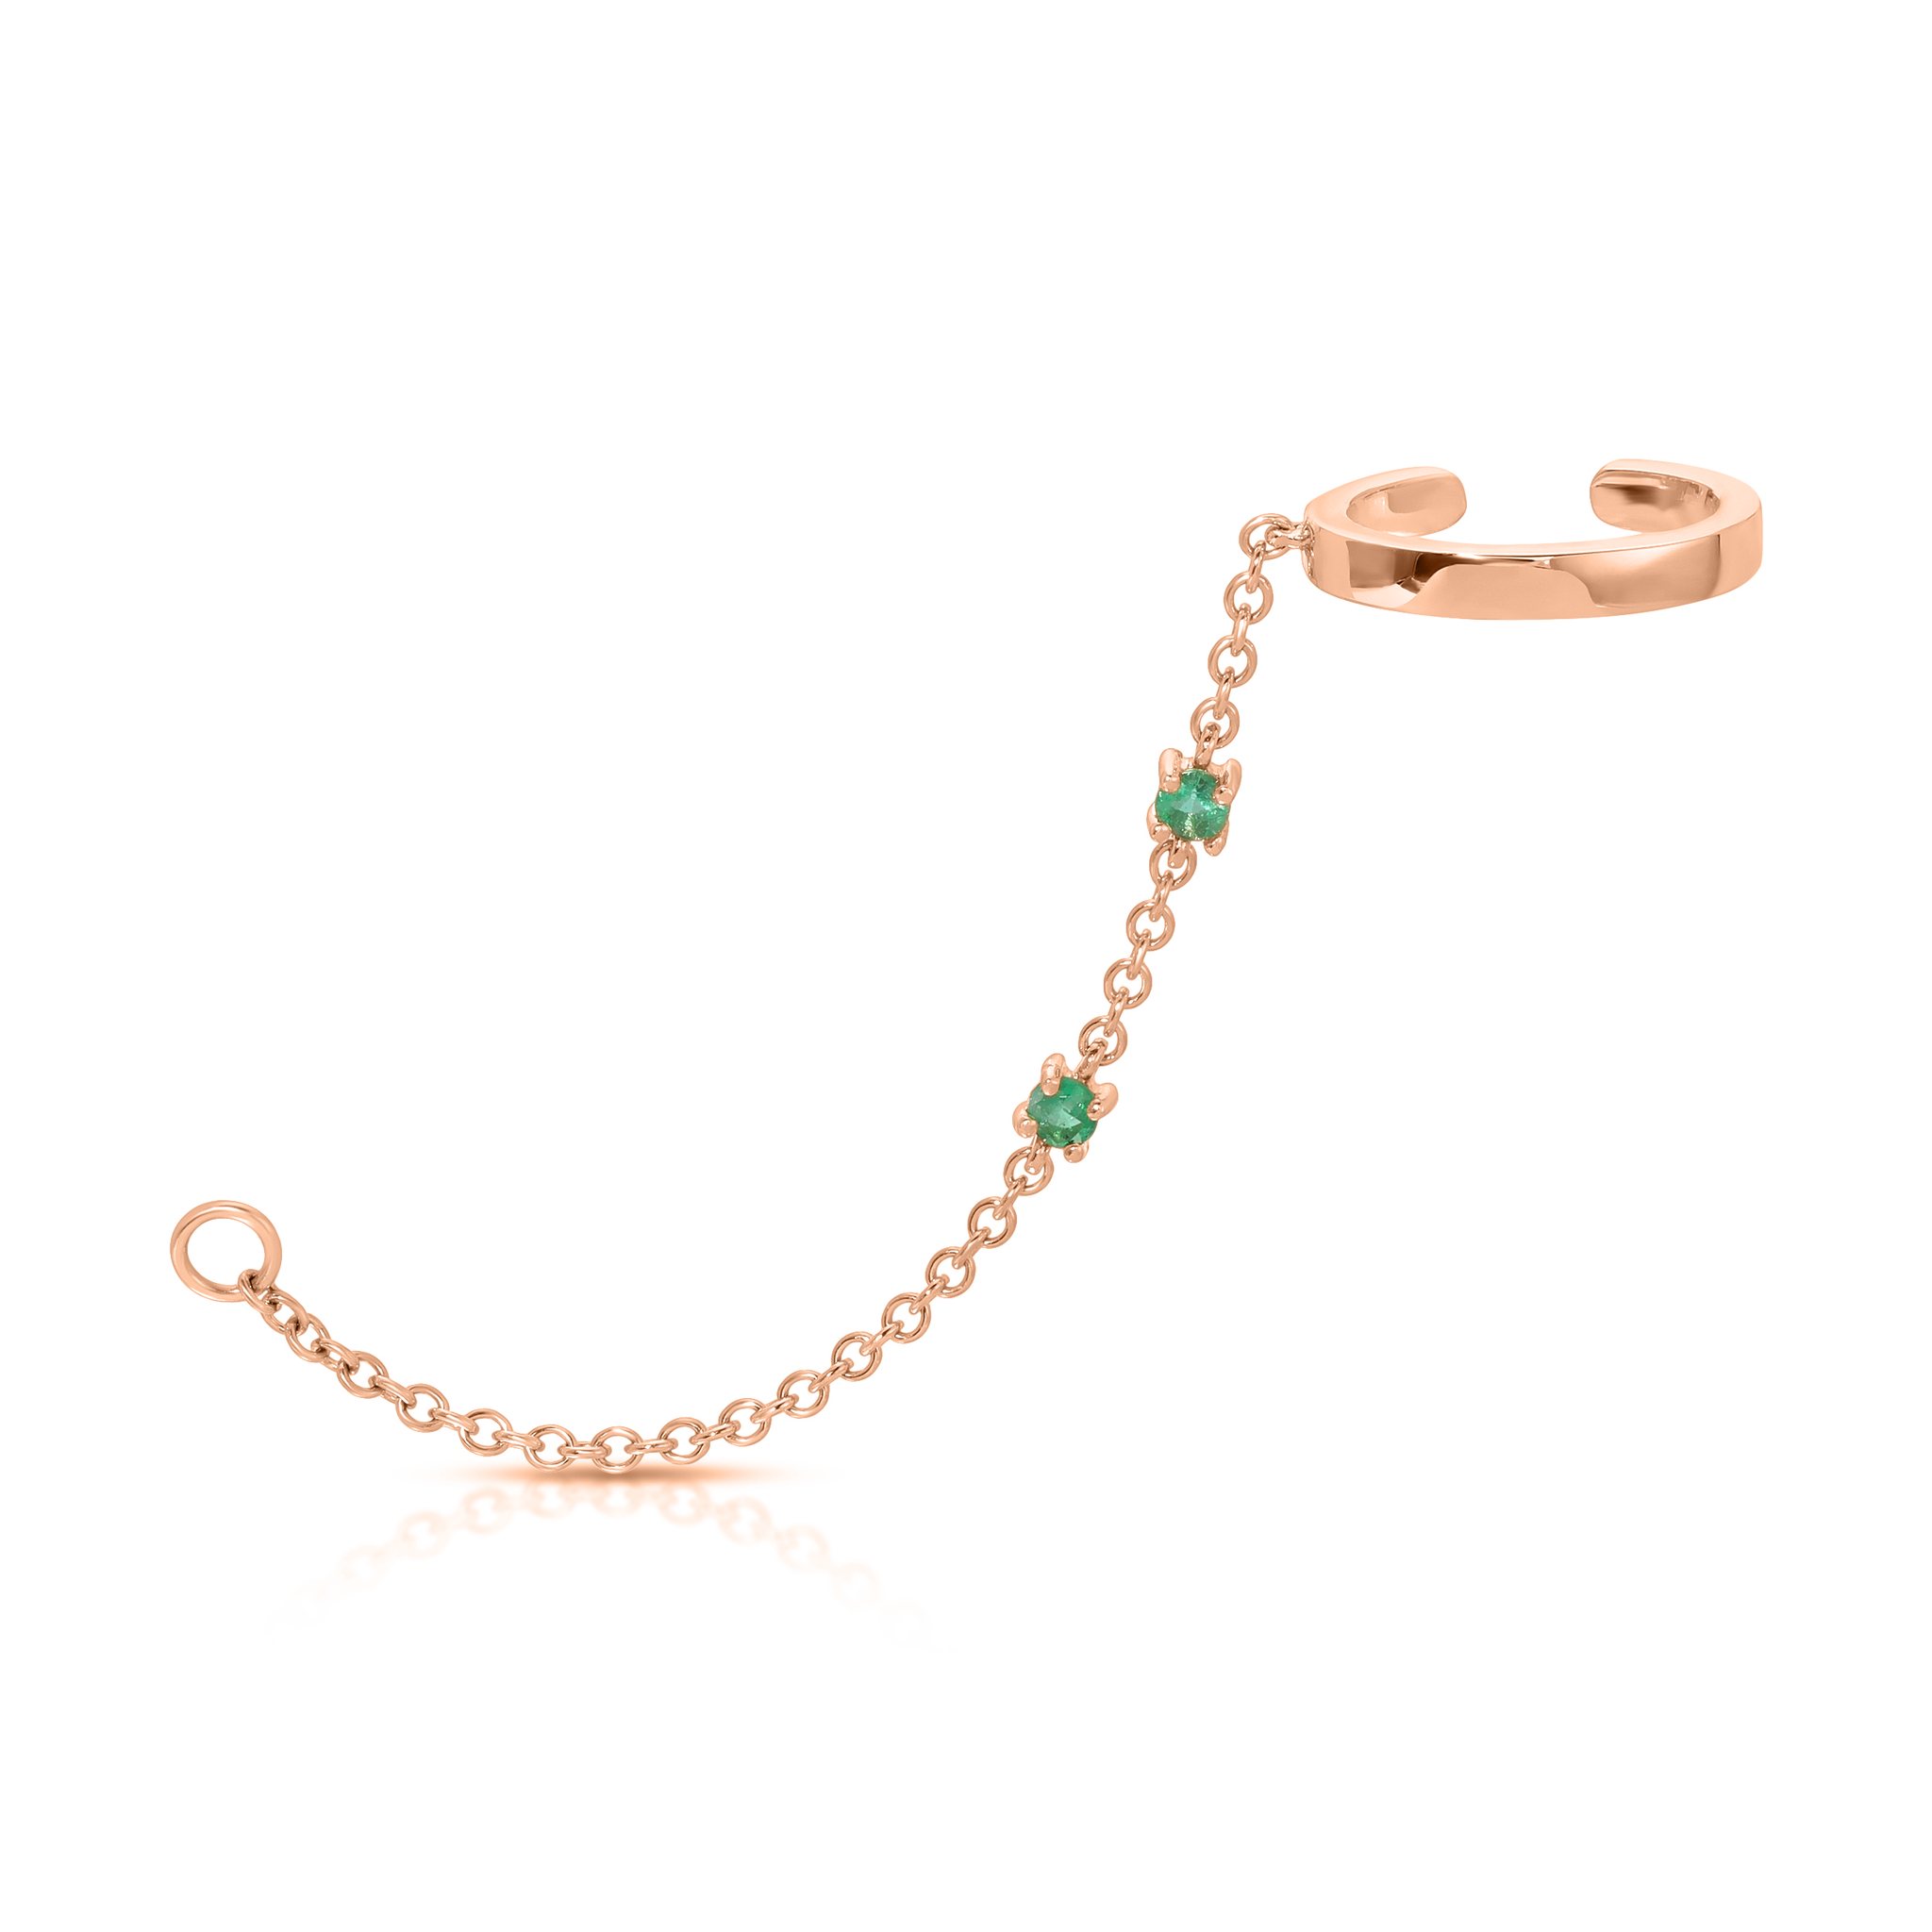 Emerald Ear Cuff With Chain Loop